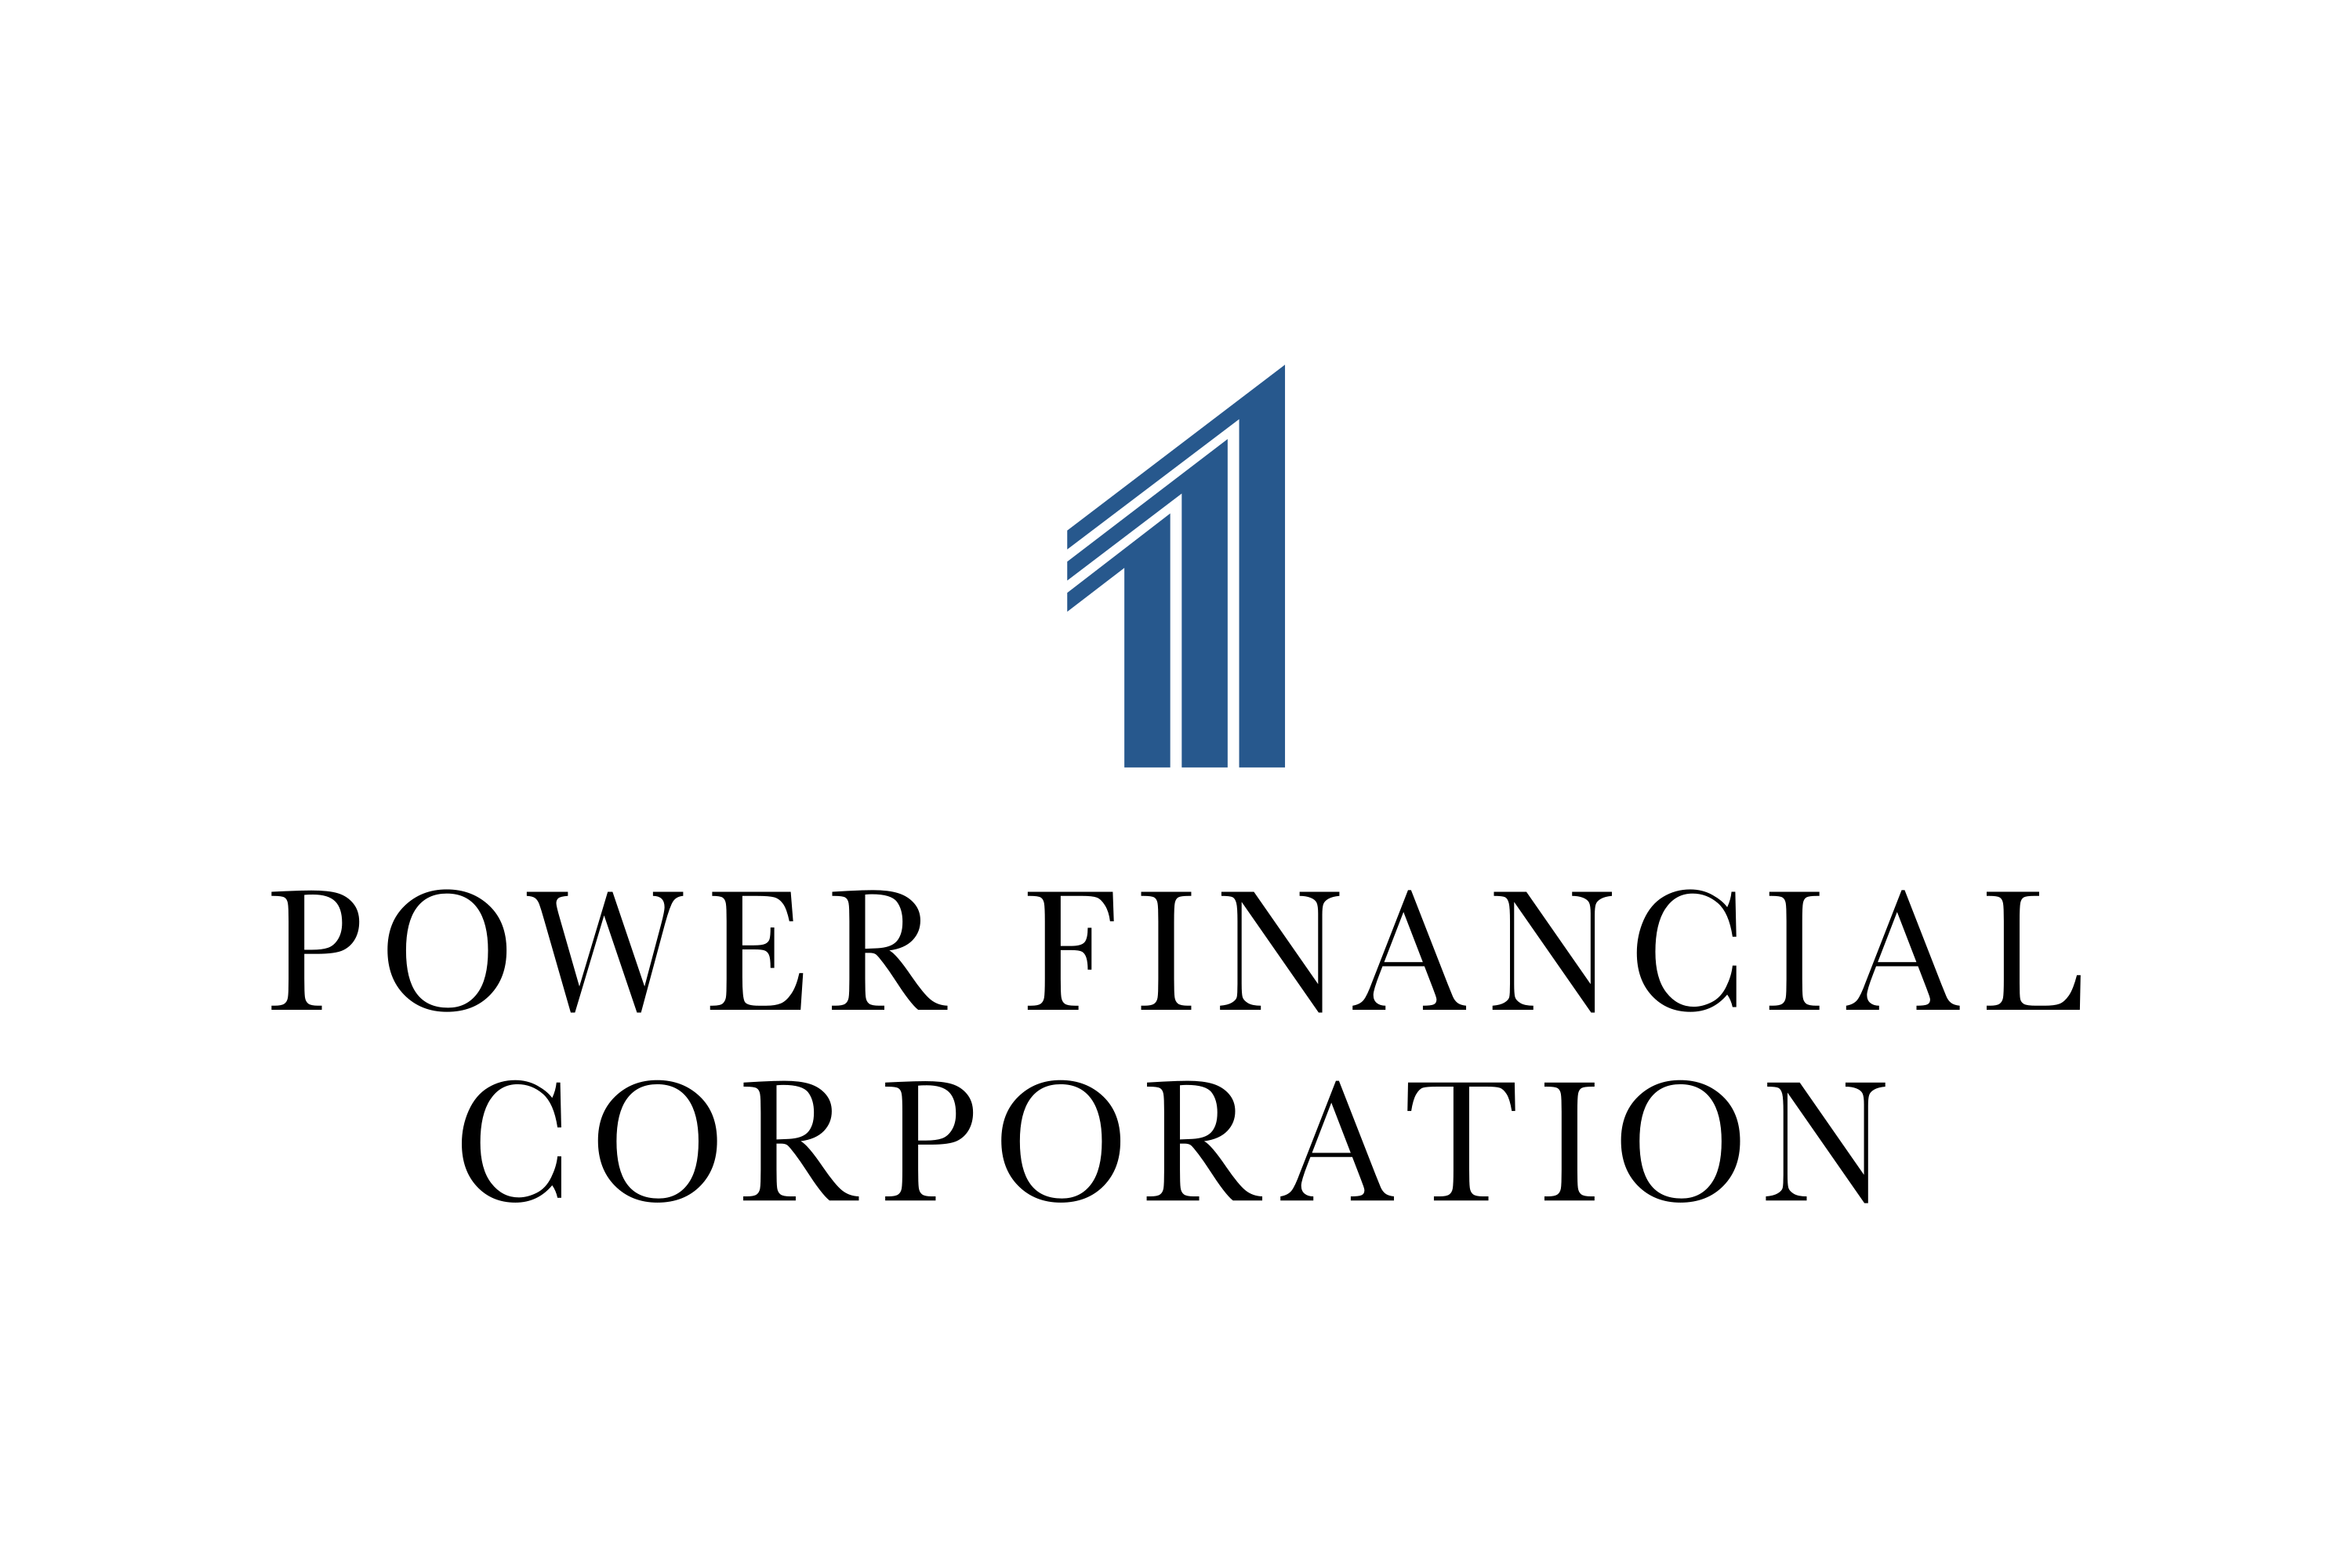 Power Financial Logo